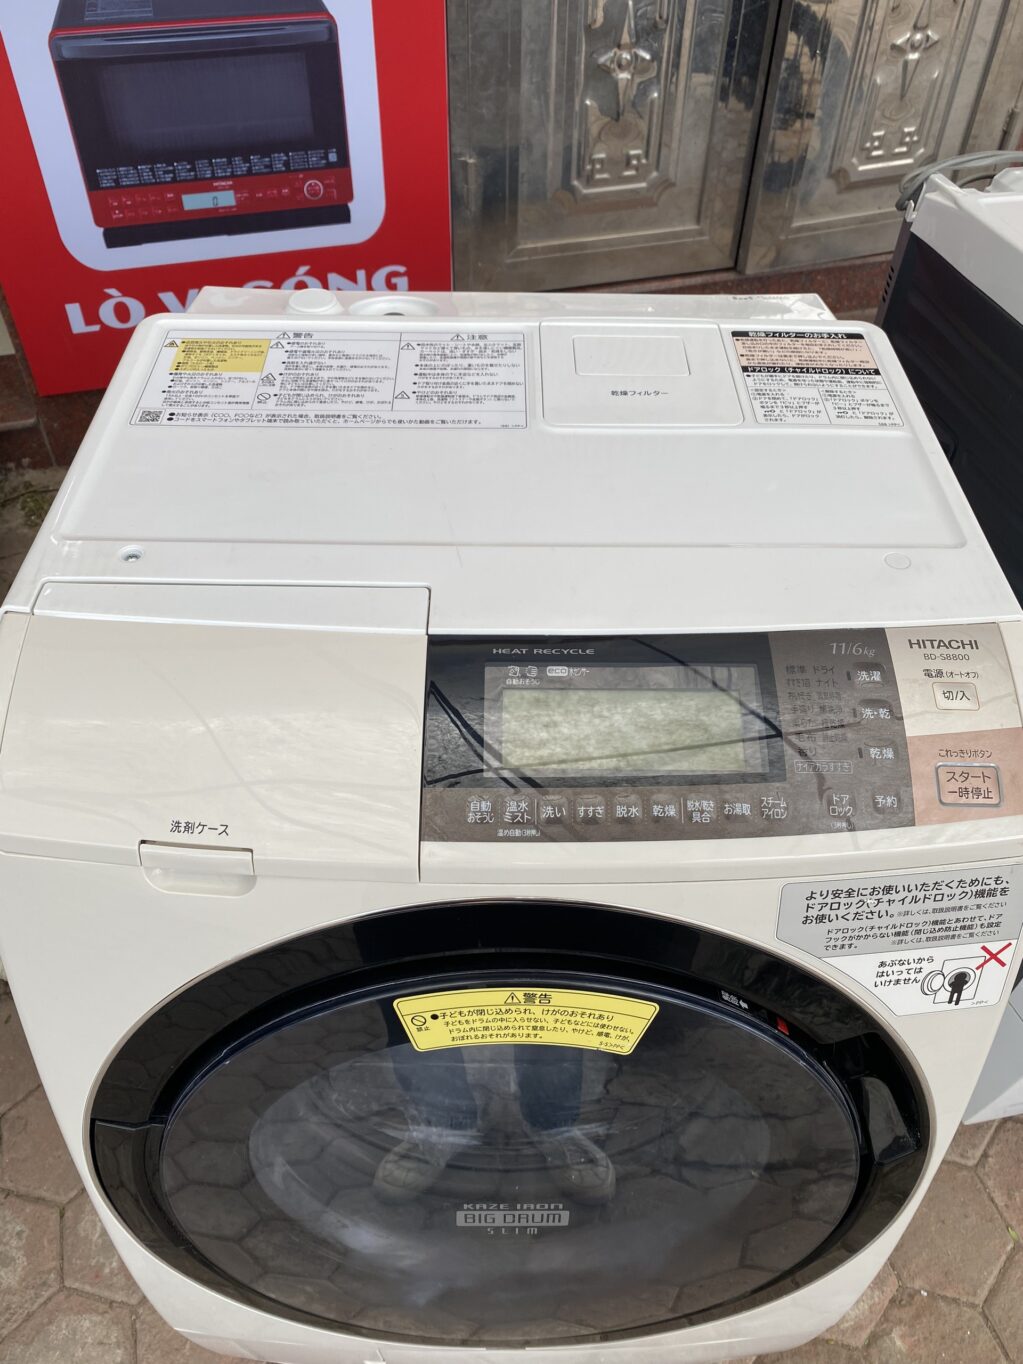 Máy giặt Hitachi BD-S8800 giặt 11kg sấy 6kg lồng giặt BigDrum | hangnhattoday.com